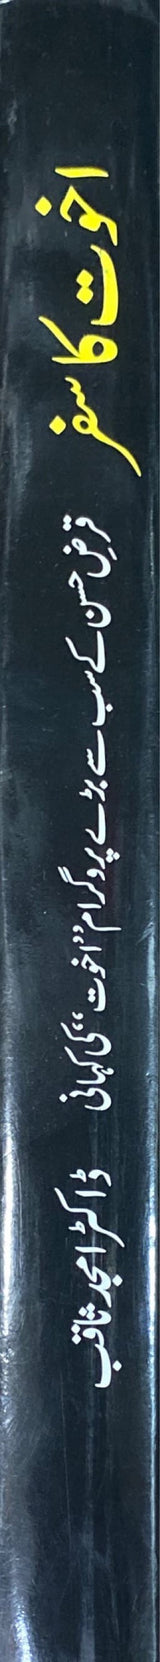 Urdu Ukhuwat Ka Safar